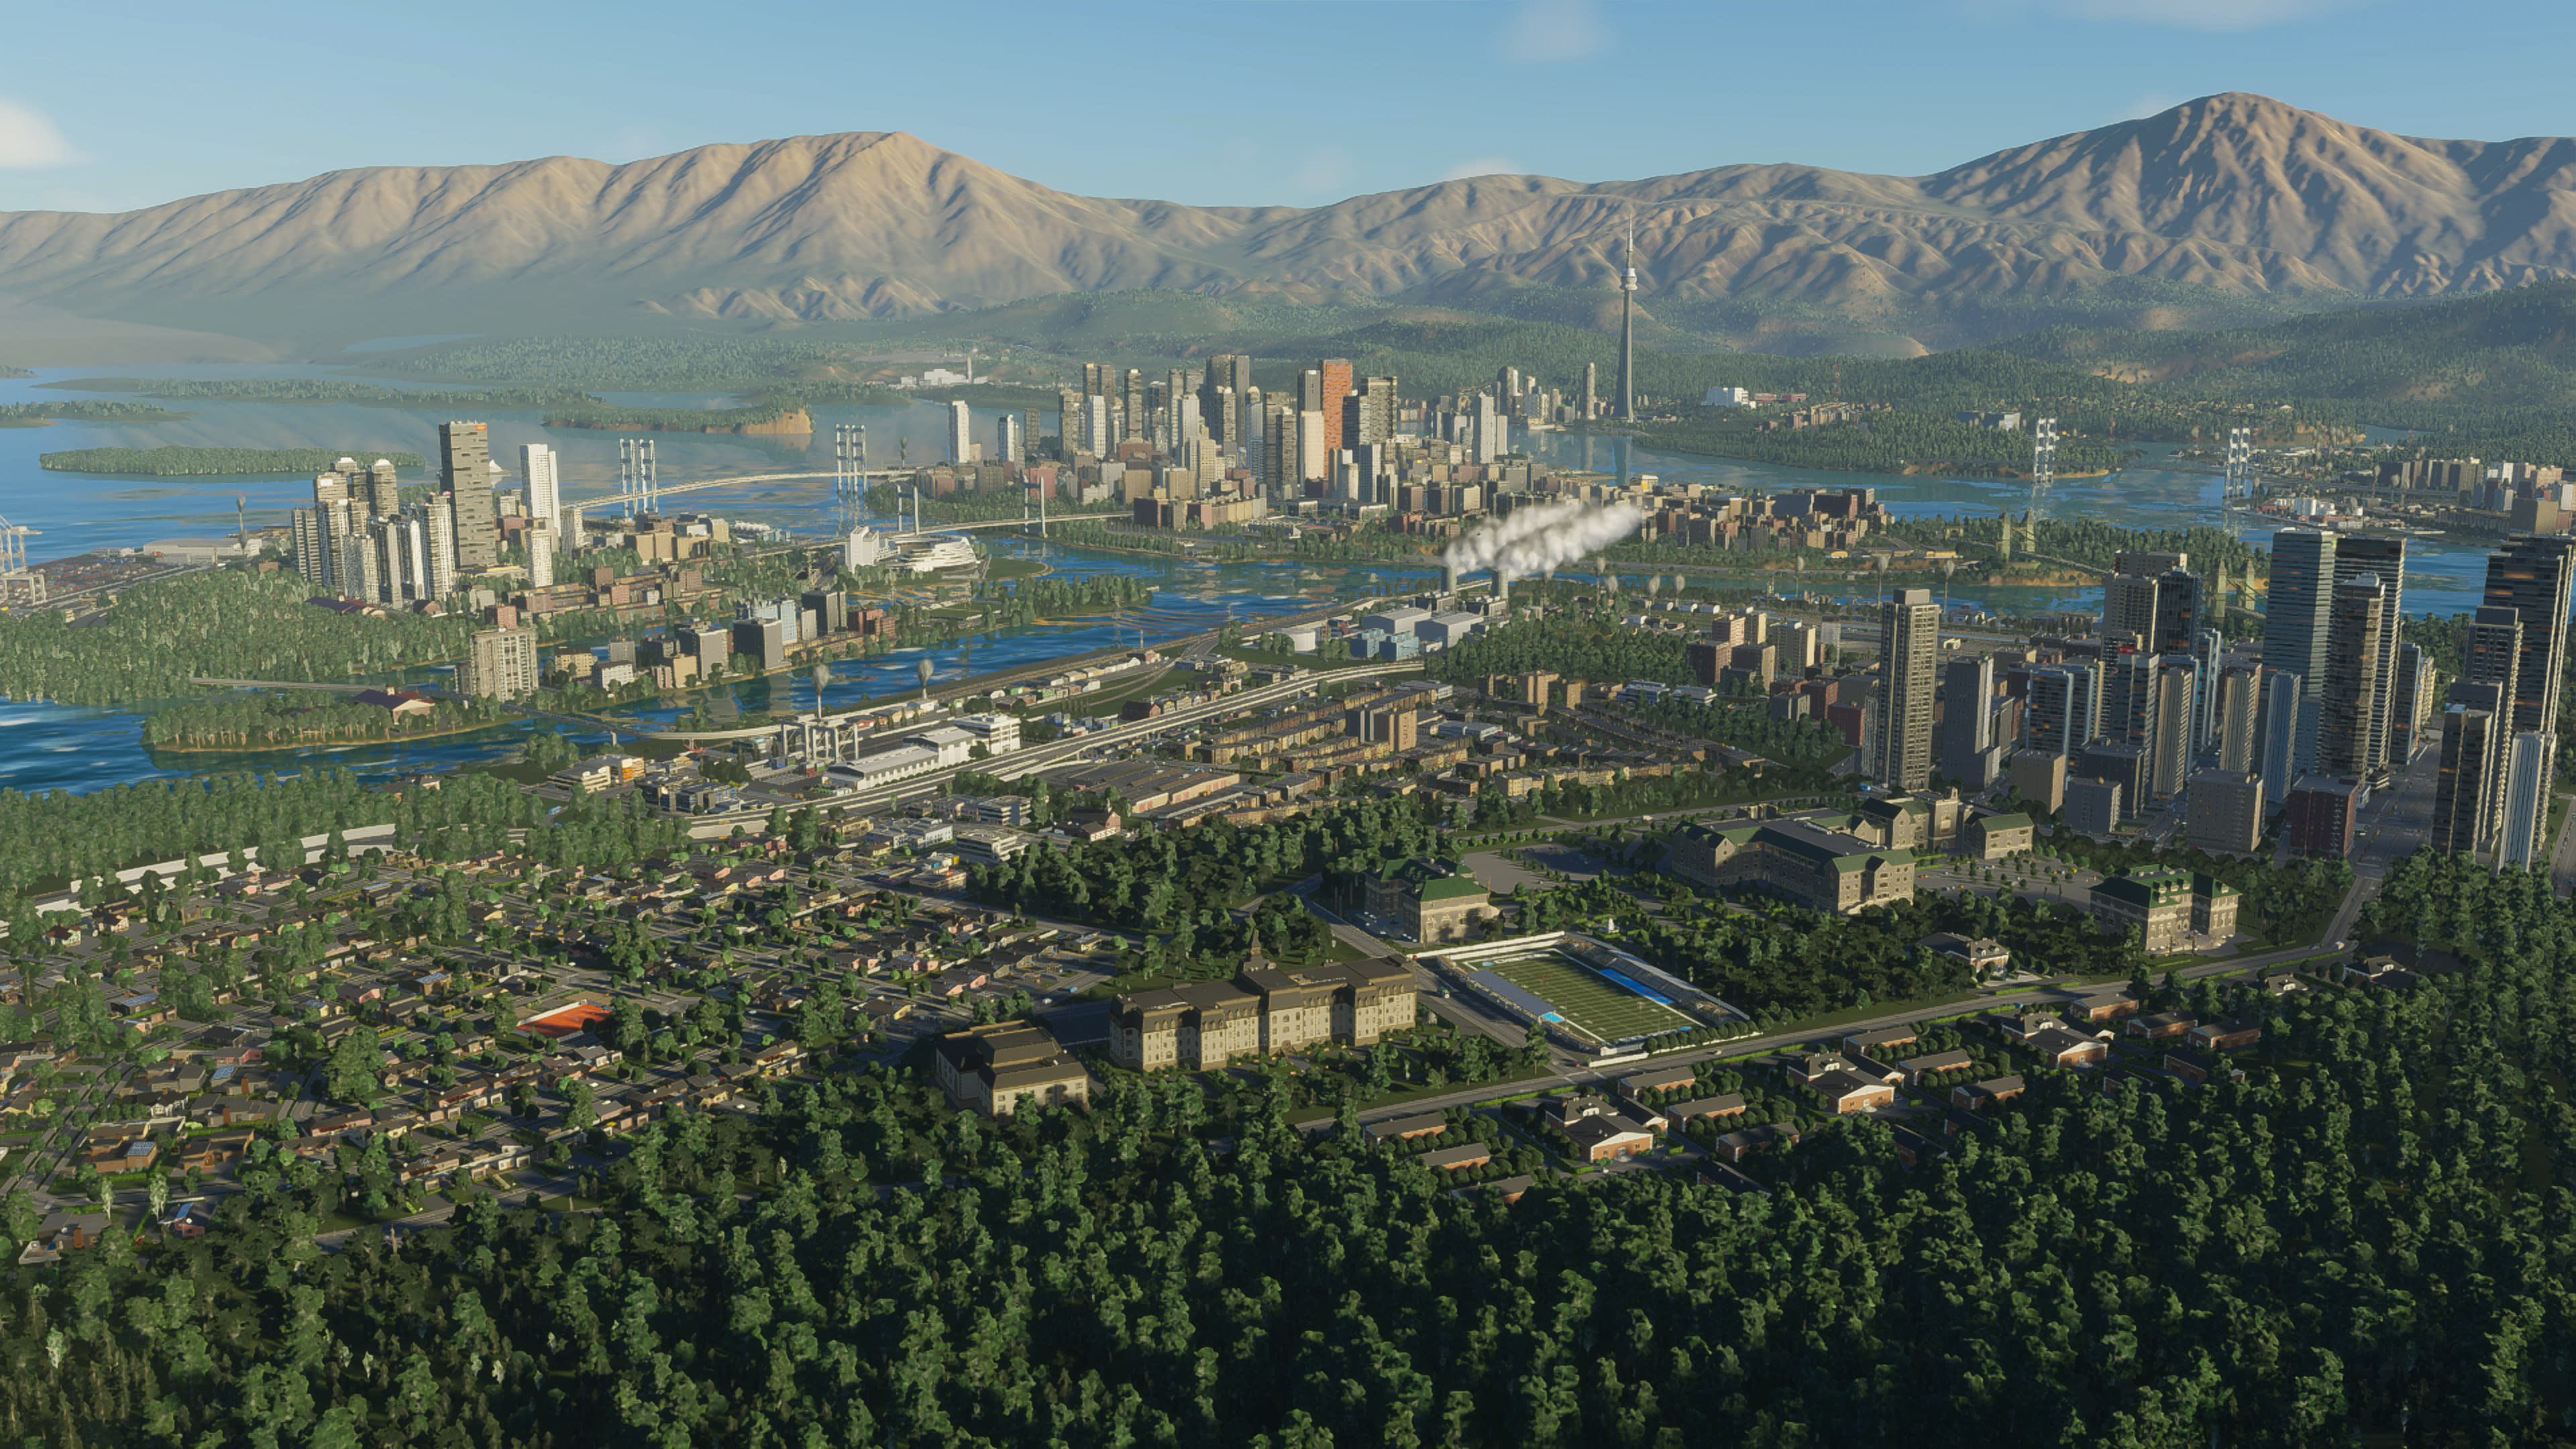 Cities: Skylines 2 Ultimate Edition Pc Digital